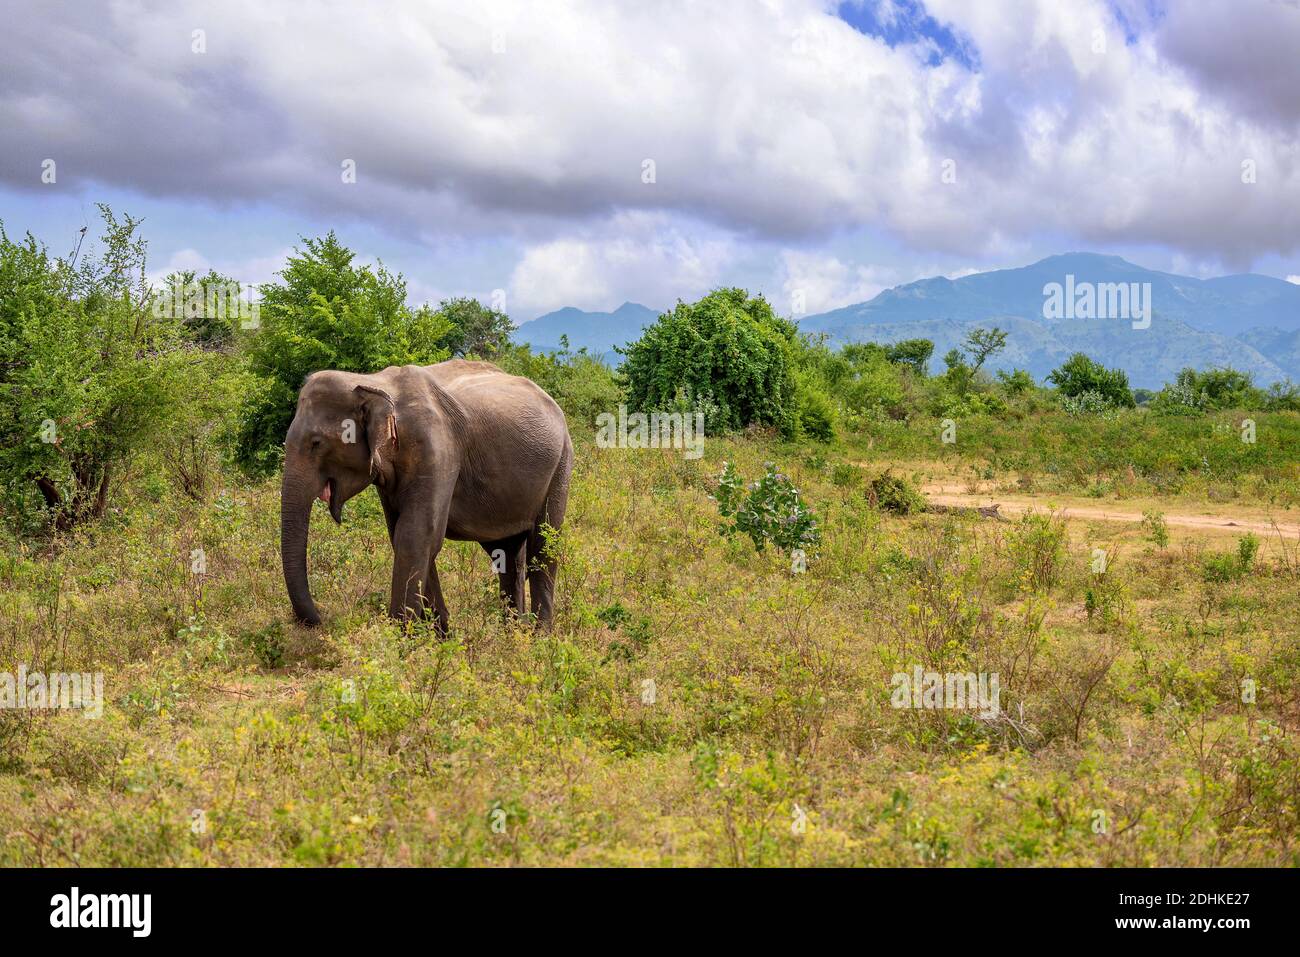 An asien elephant walking in the jungle of Sri Lanka Stock Photo